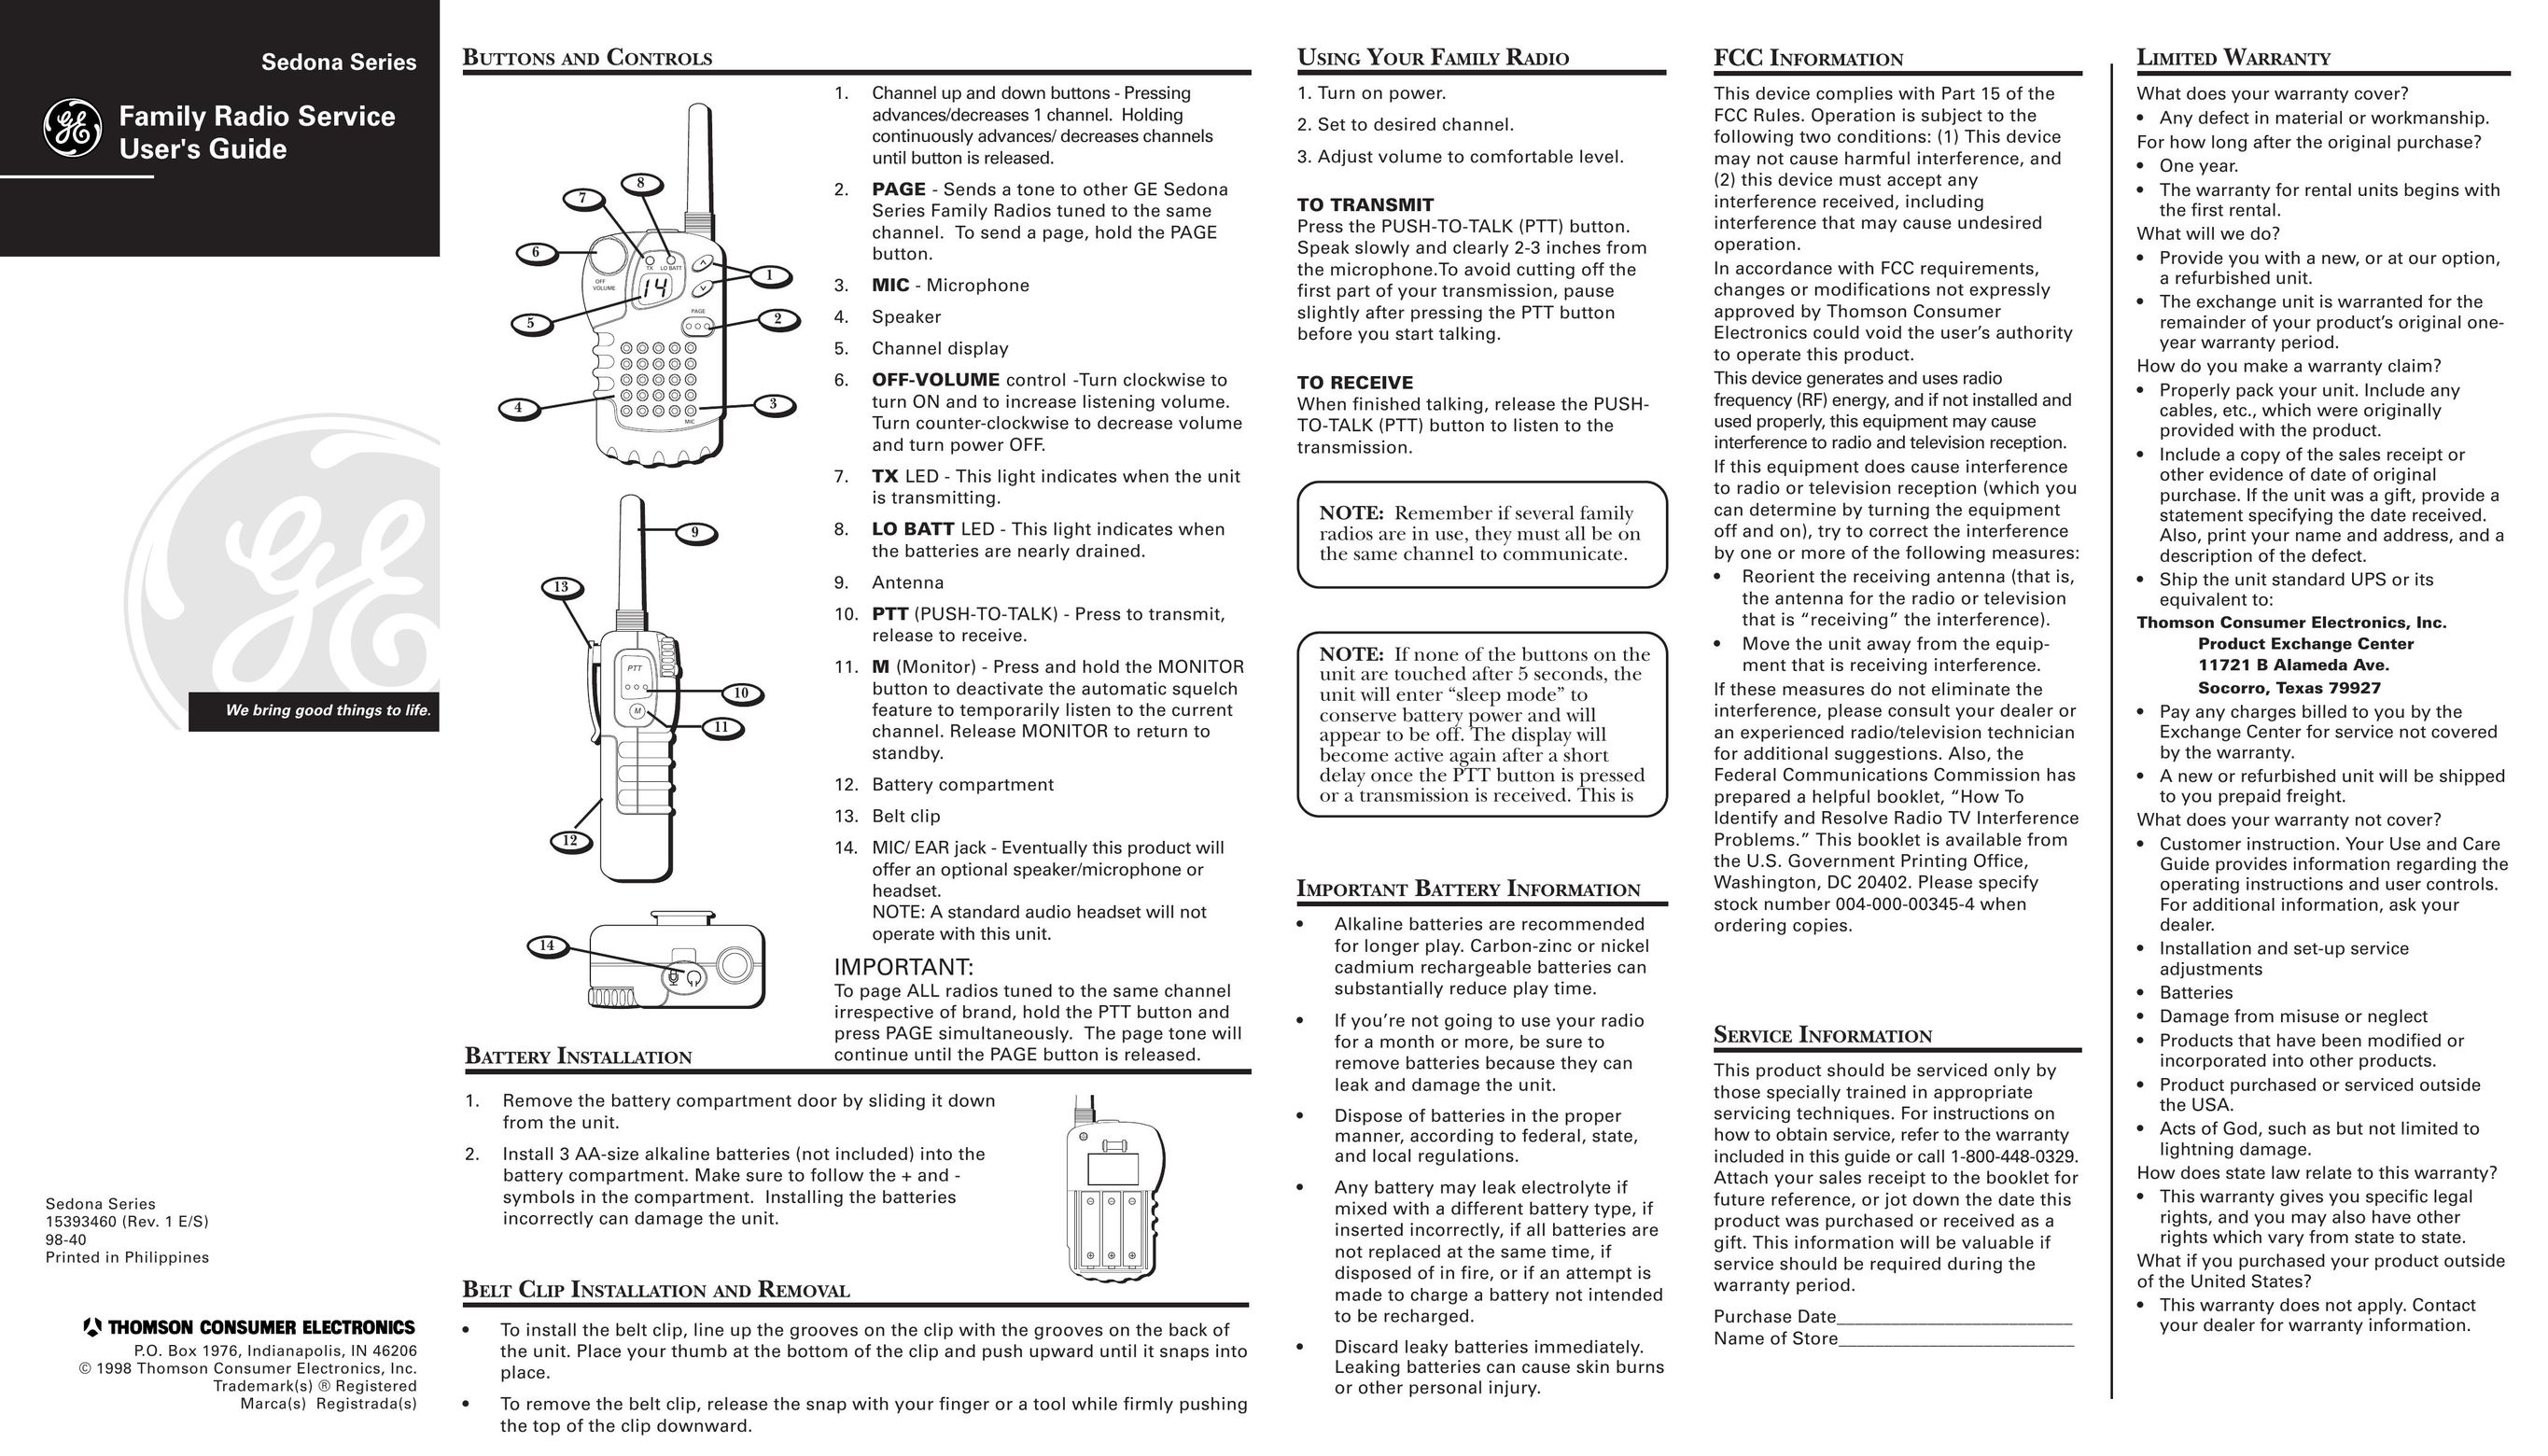 GE Sedona Series Portable Radio User Manual